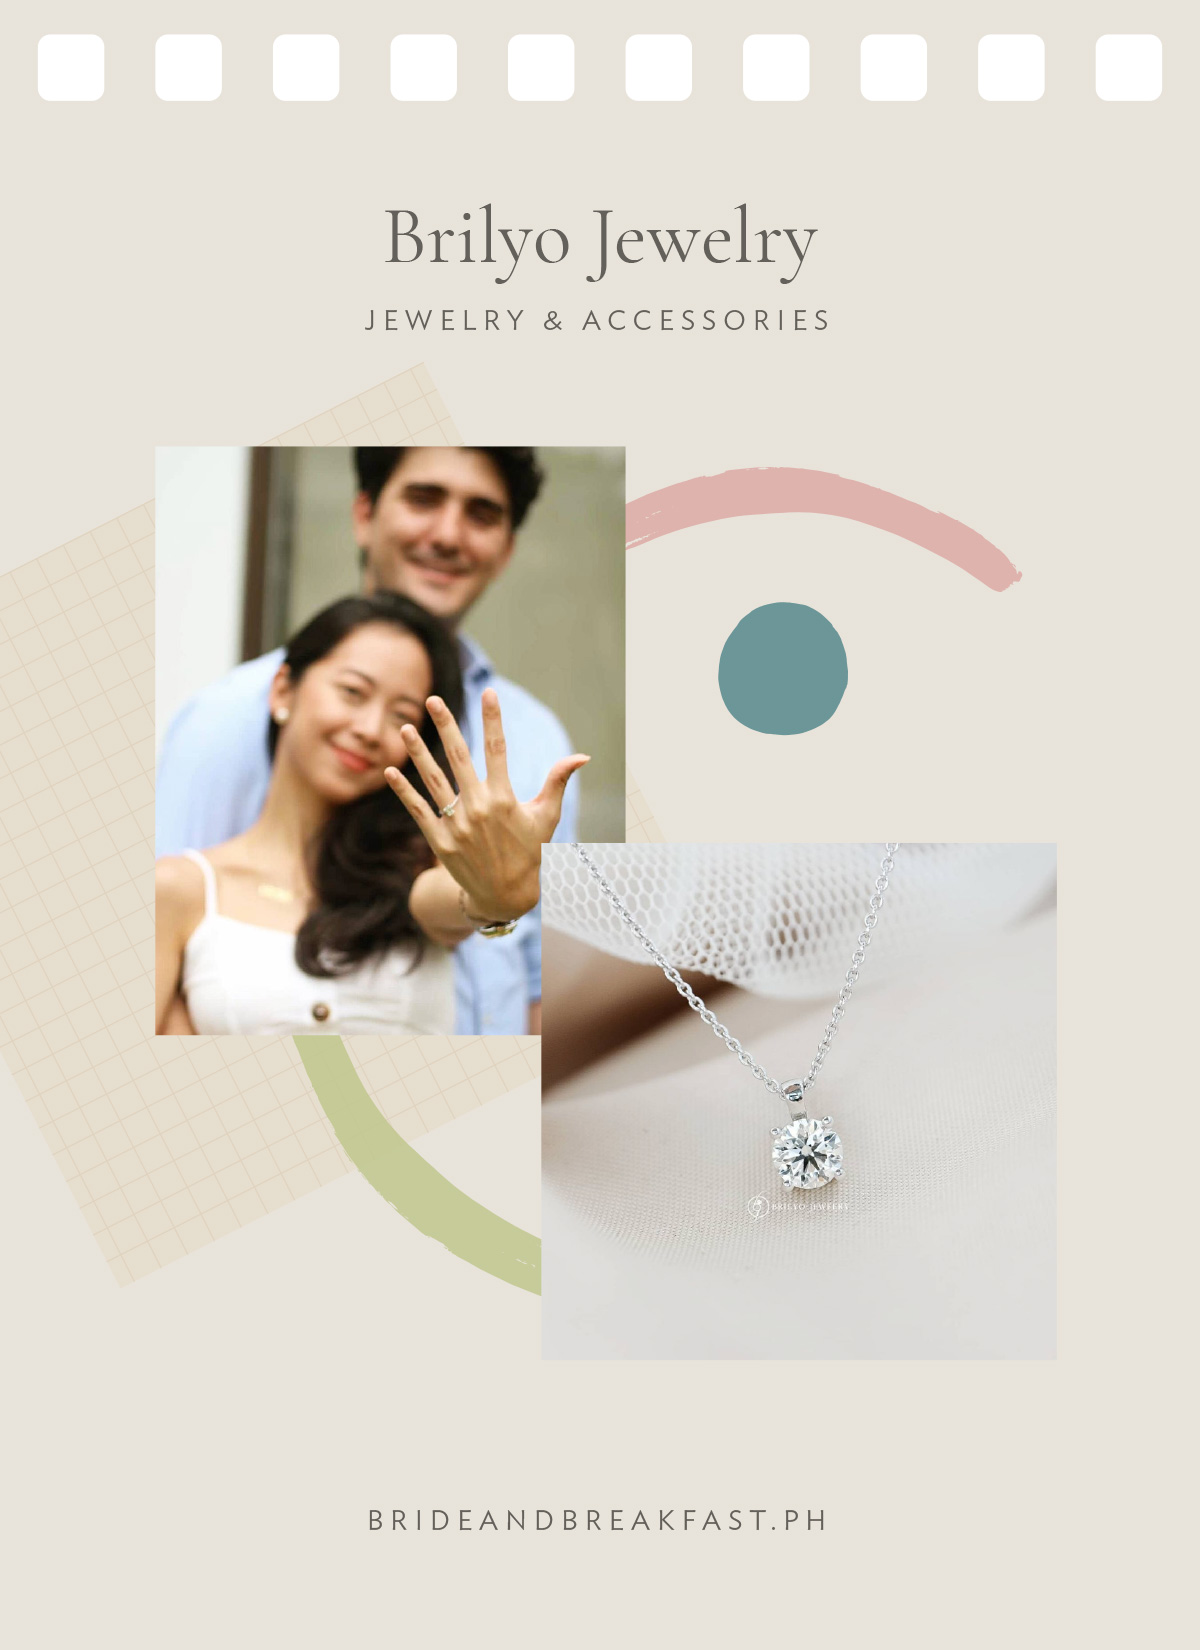 Brilyo Jewelry